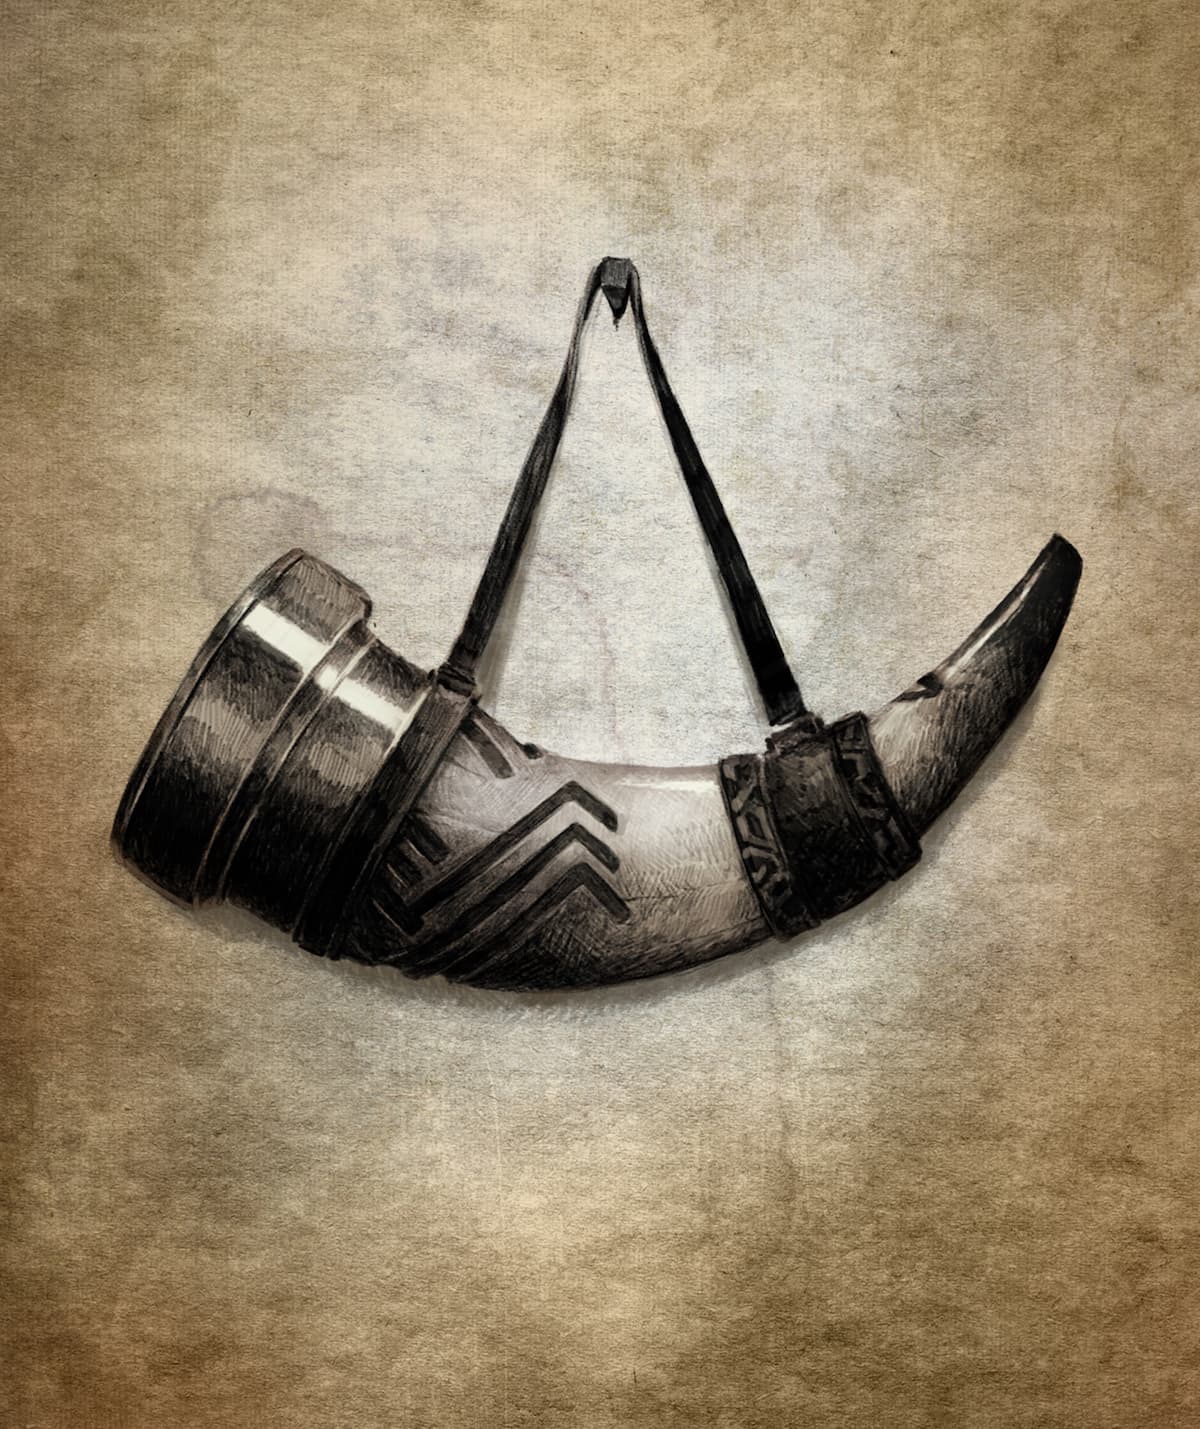 Ornn Horn Concept.jpg